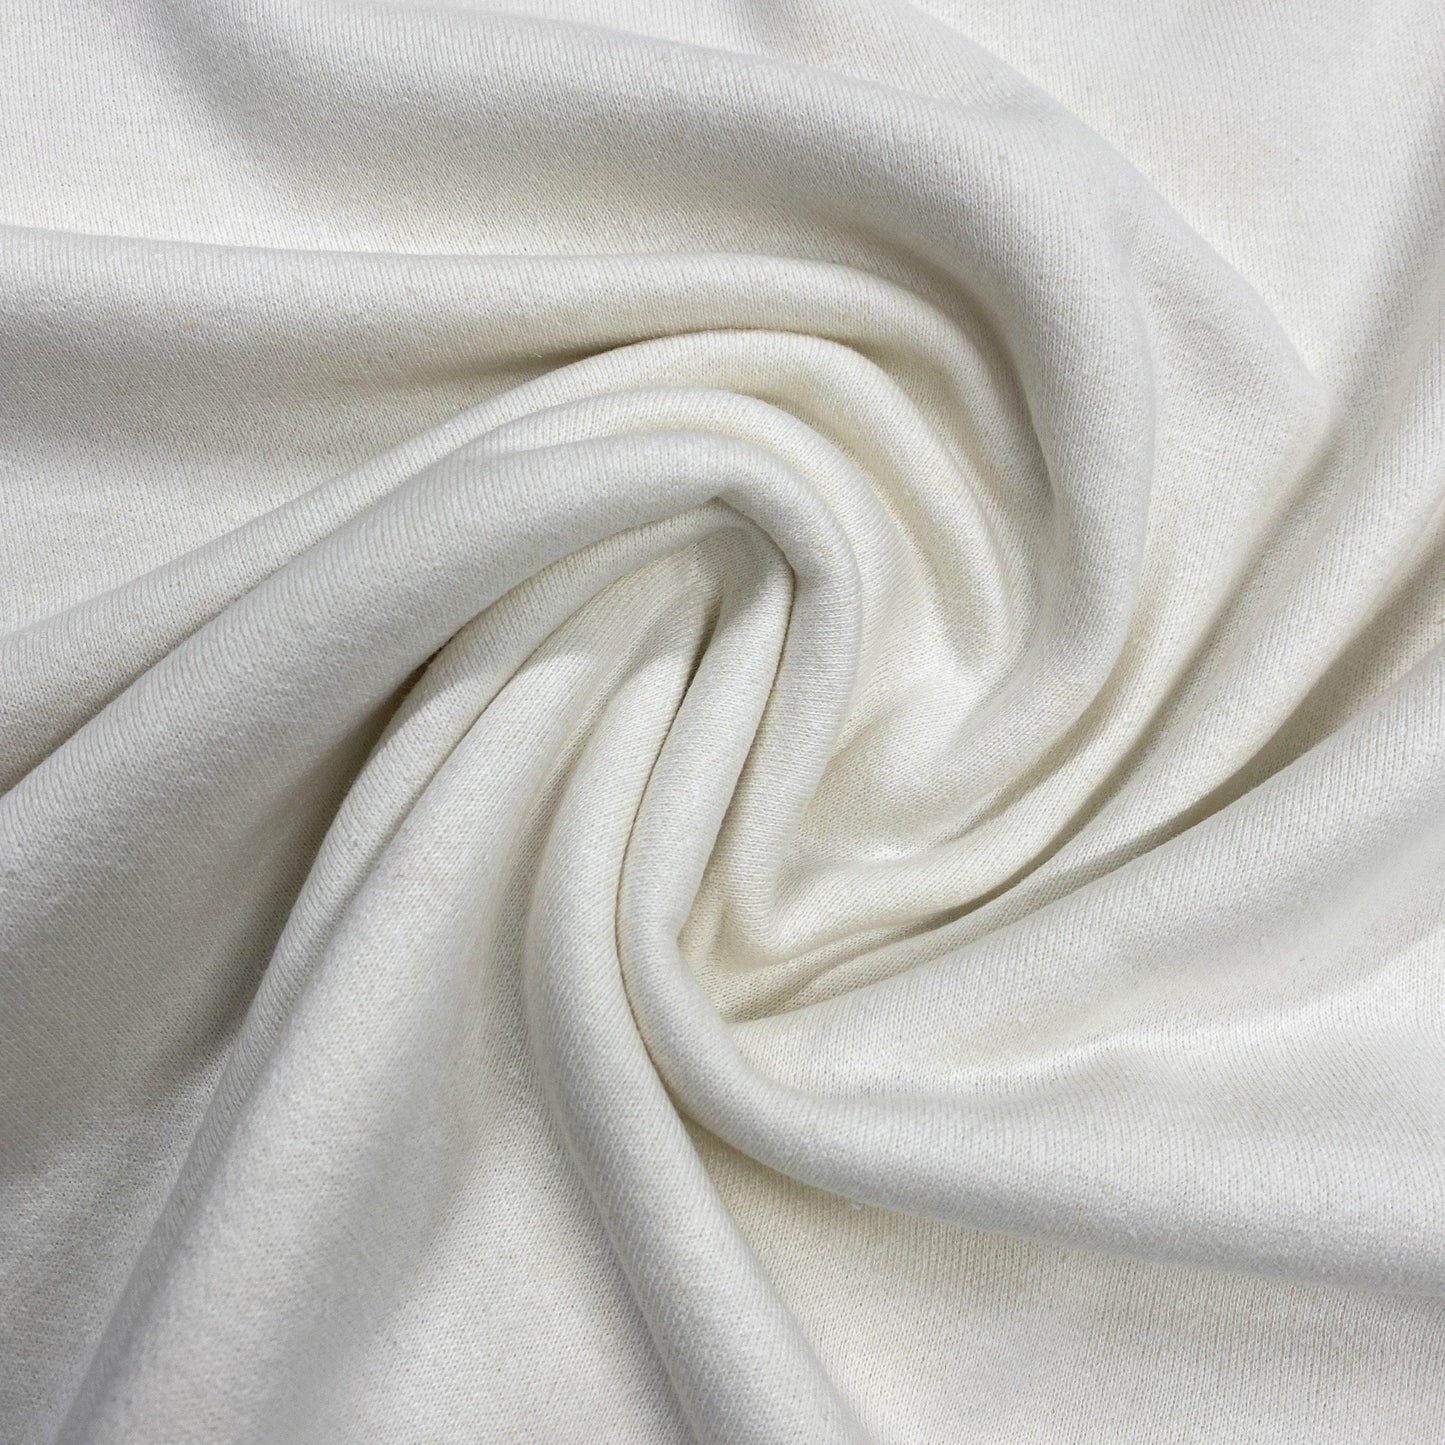 Hemp Cotton Fleece Fabric - 500 GSM, $12.87/yd - Rolls - Nature's Fabrics